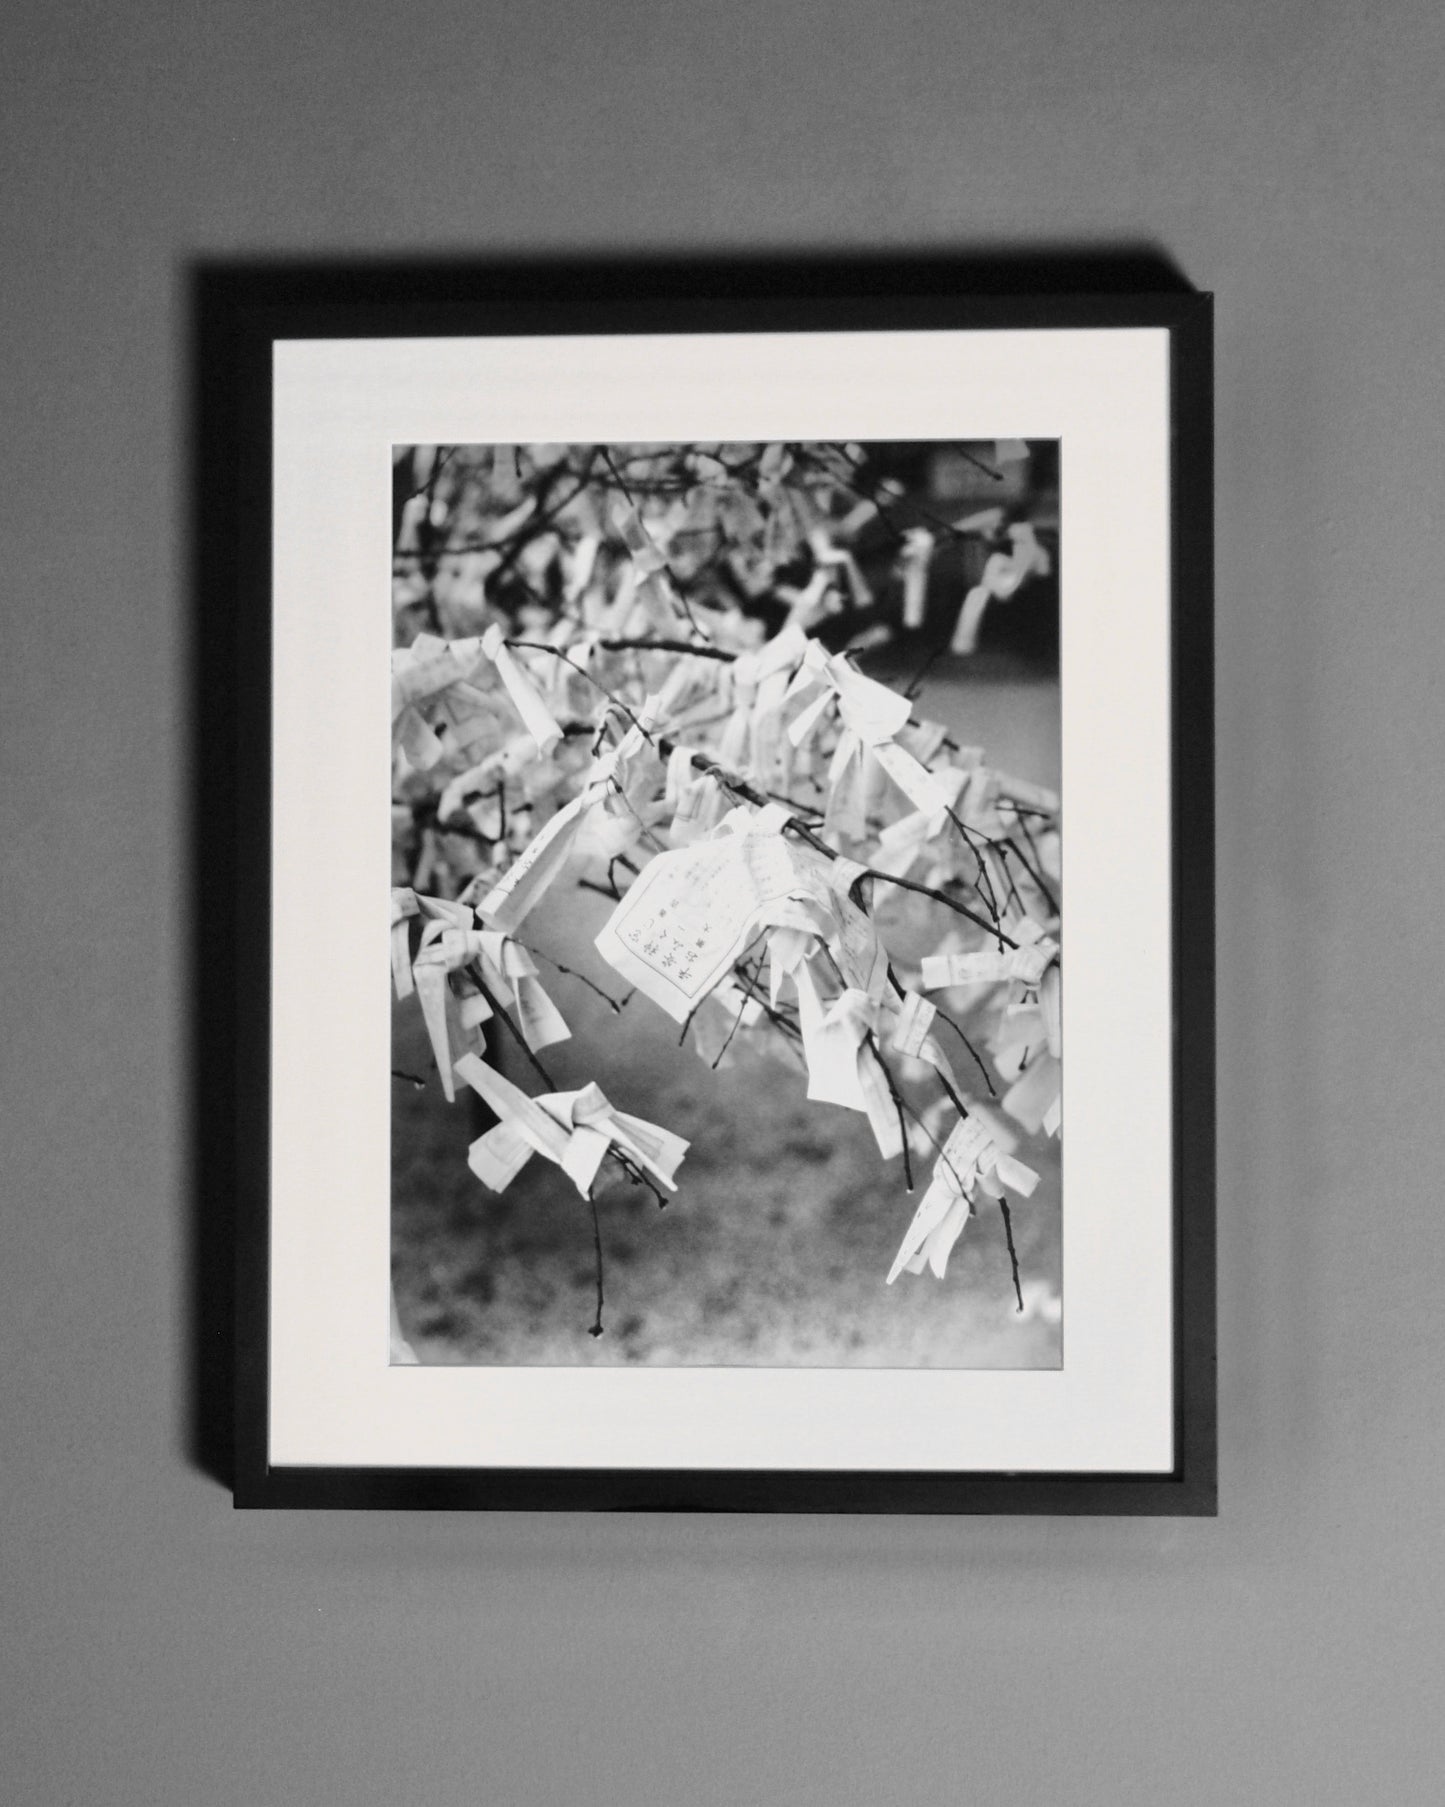 HORST FRIEDRICH'S "WISHING TREE" // Framed Print 